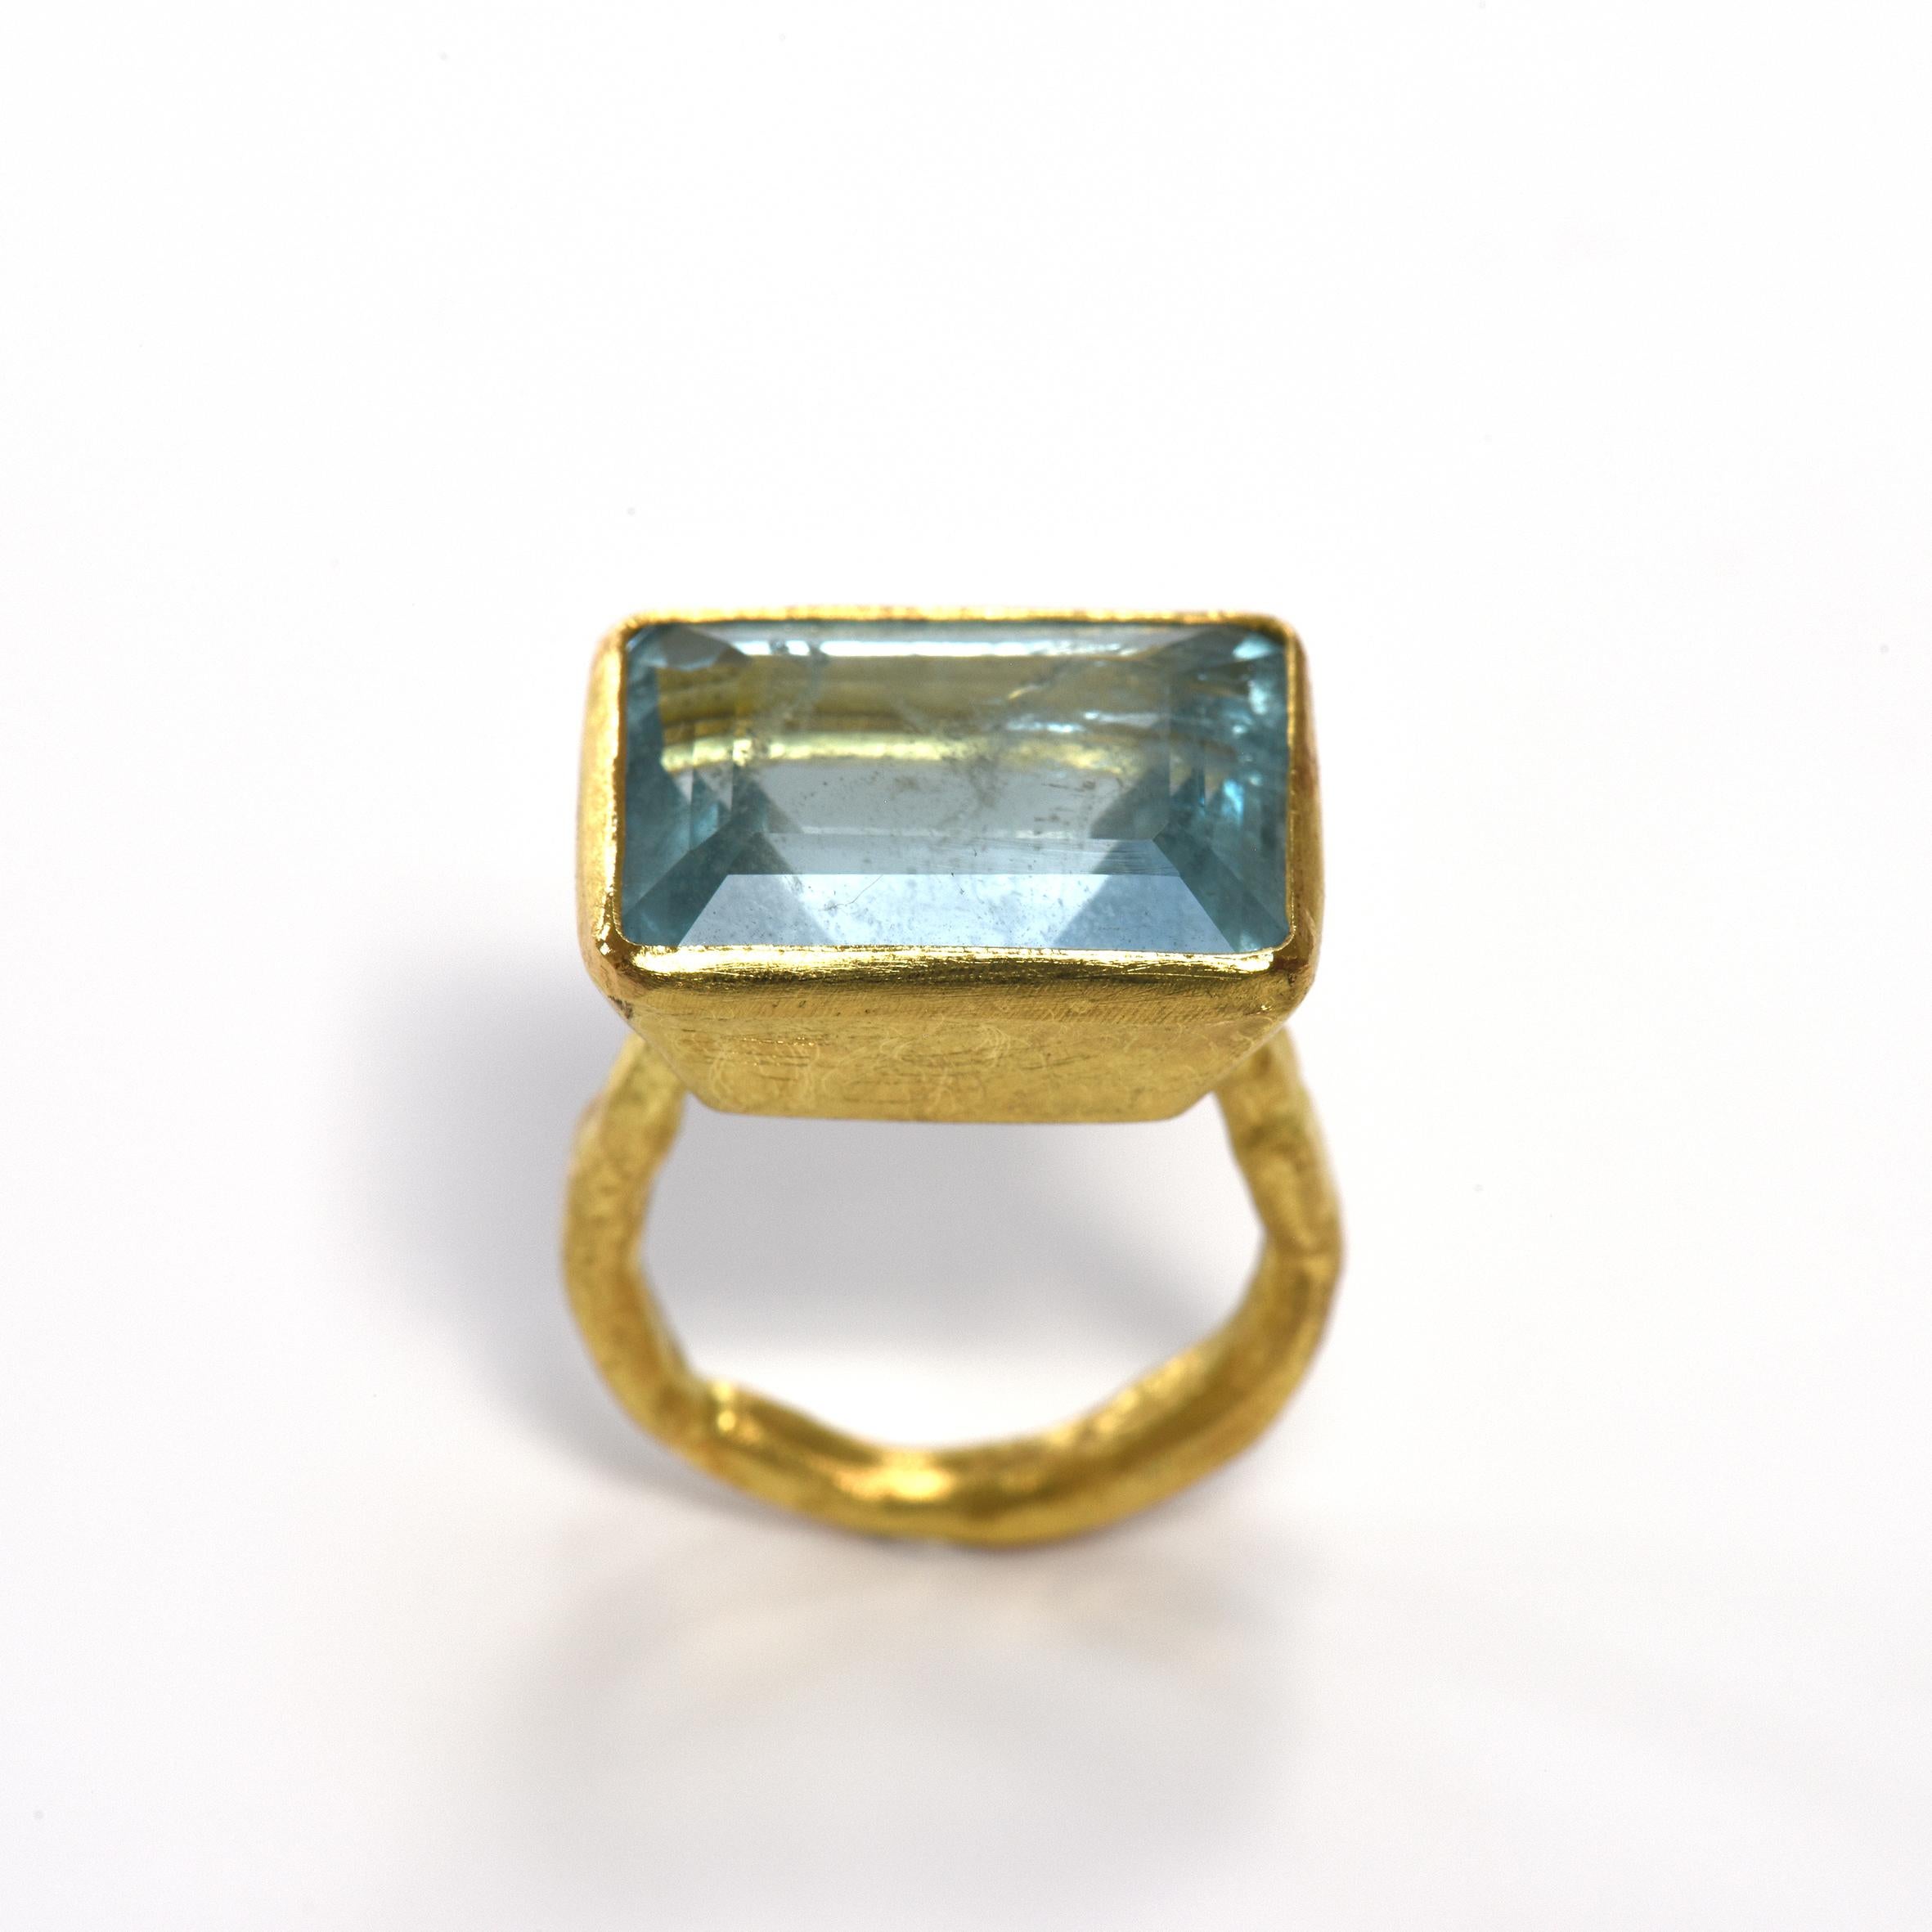 Emerald Cut Large 13.68 Carat Aquamarine 18 Karat Gold Cocktail Ring by Disa Allsopp For Sale